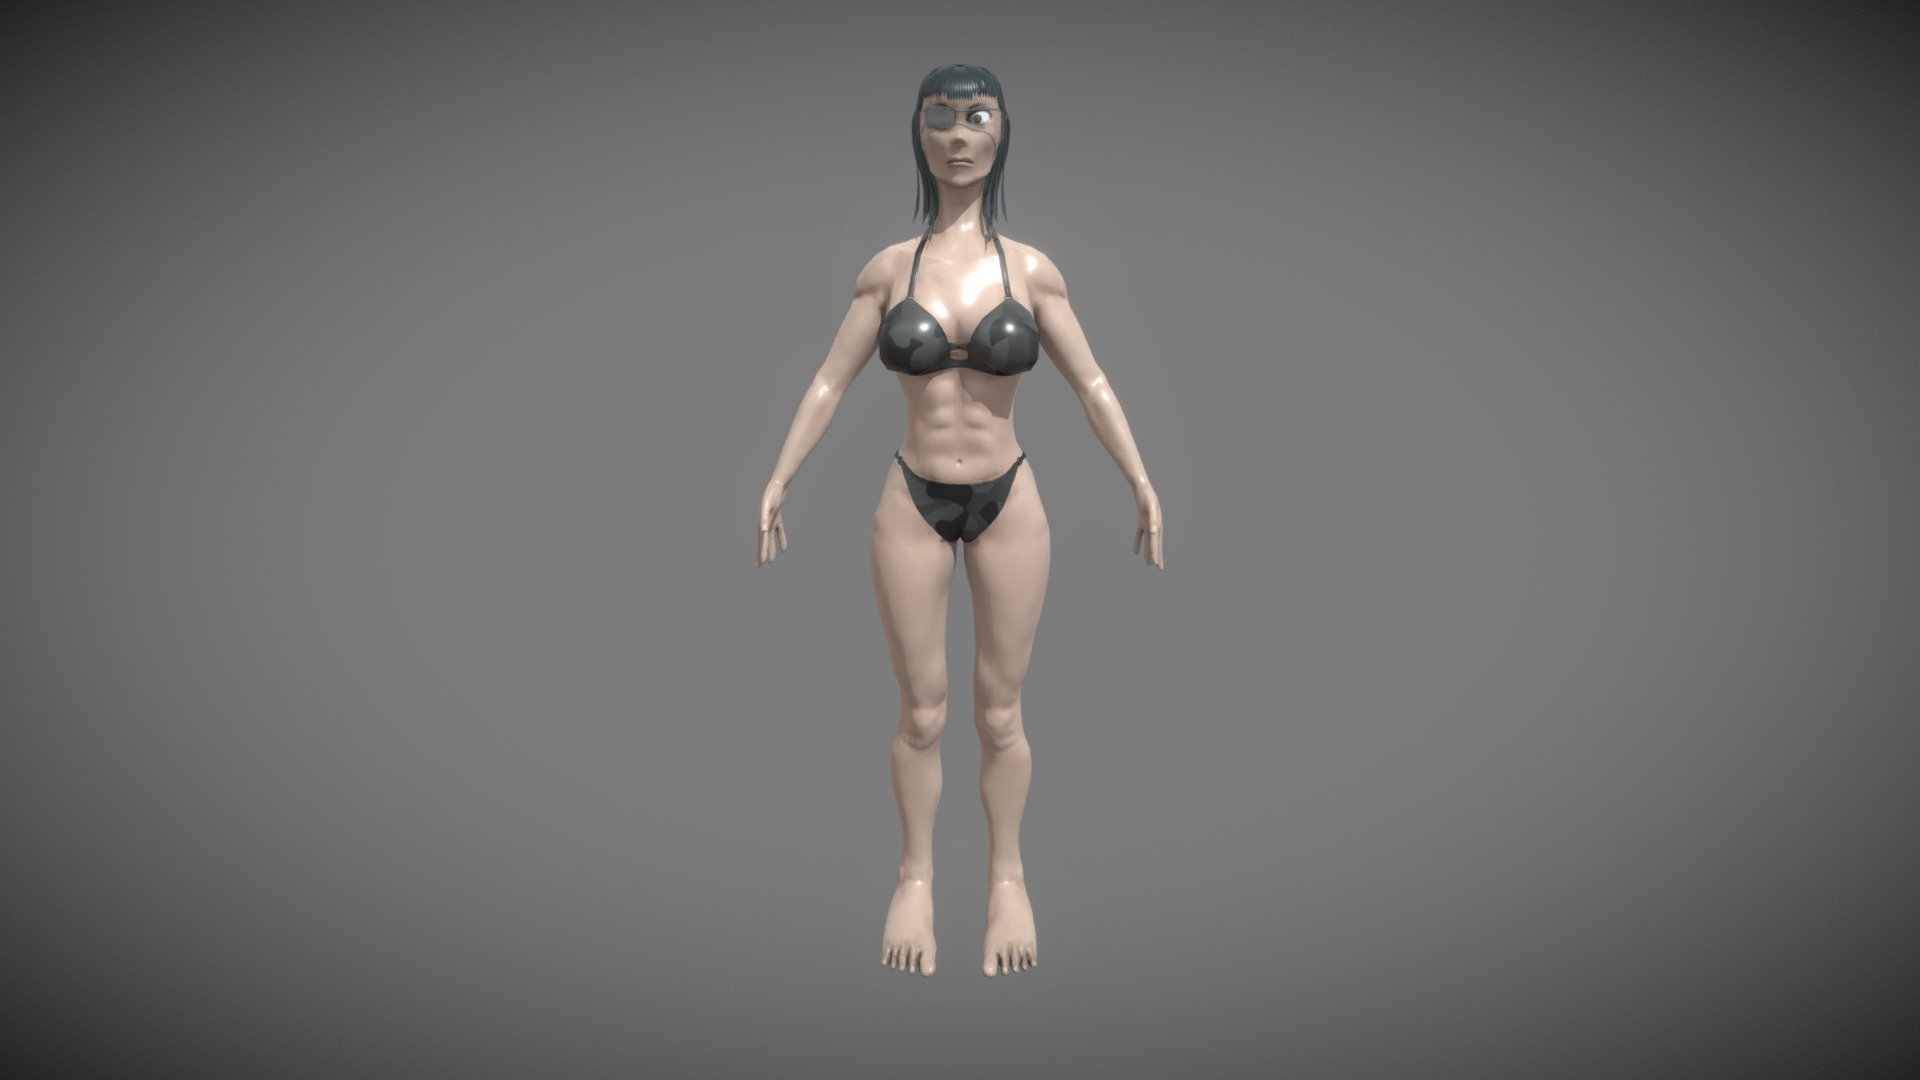 3D model 09 12 2019 Valmet (Jormungand) - This is a 3D model of the 09 12 2019 Valmet (Jormungand). The 3D model is about a woman wearing a garment.